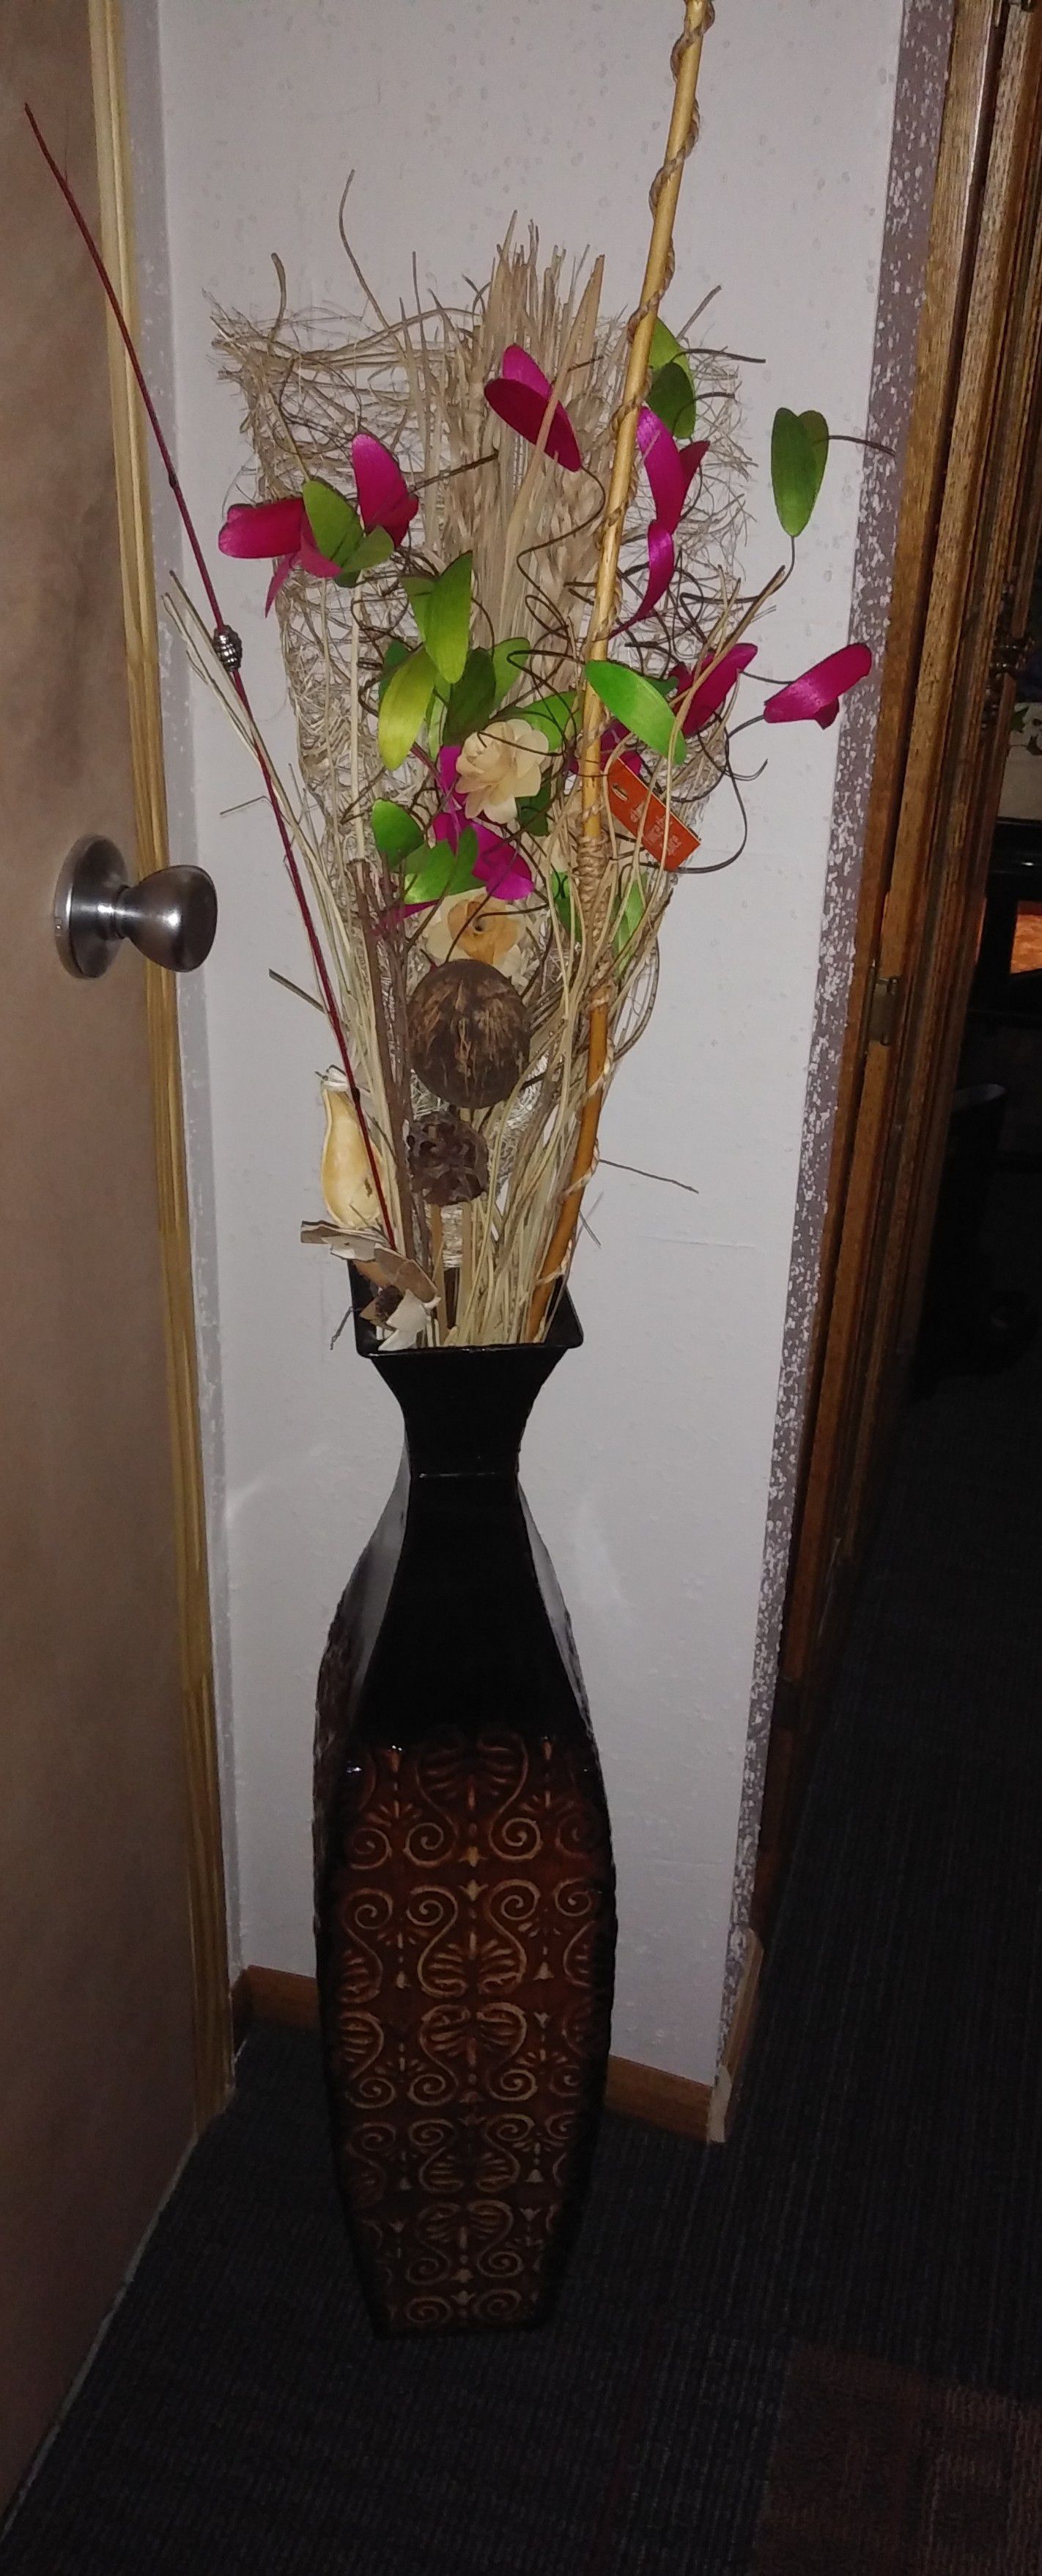 Big vase and beautiful flowers